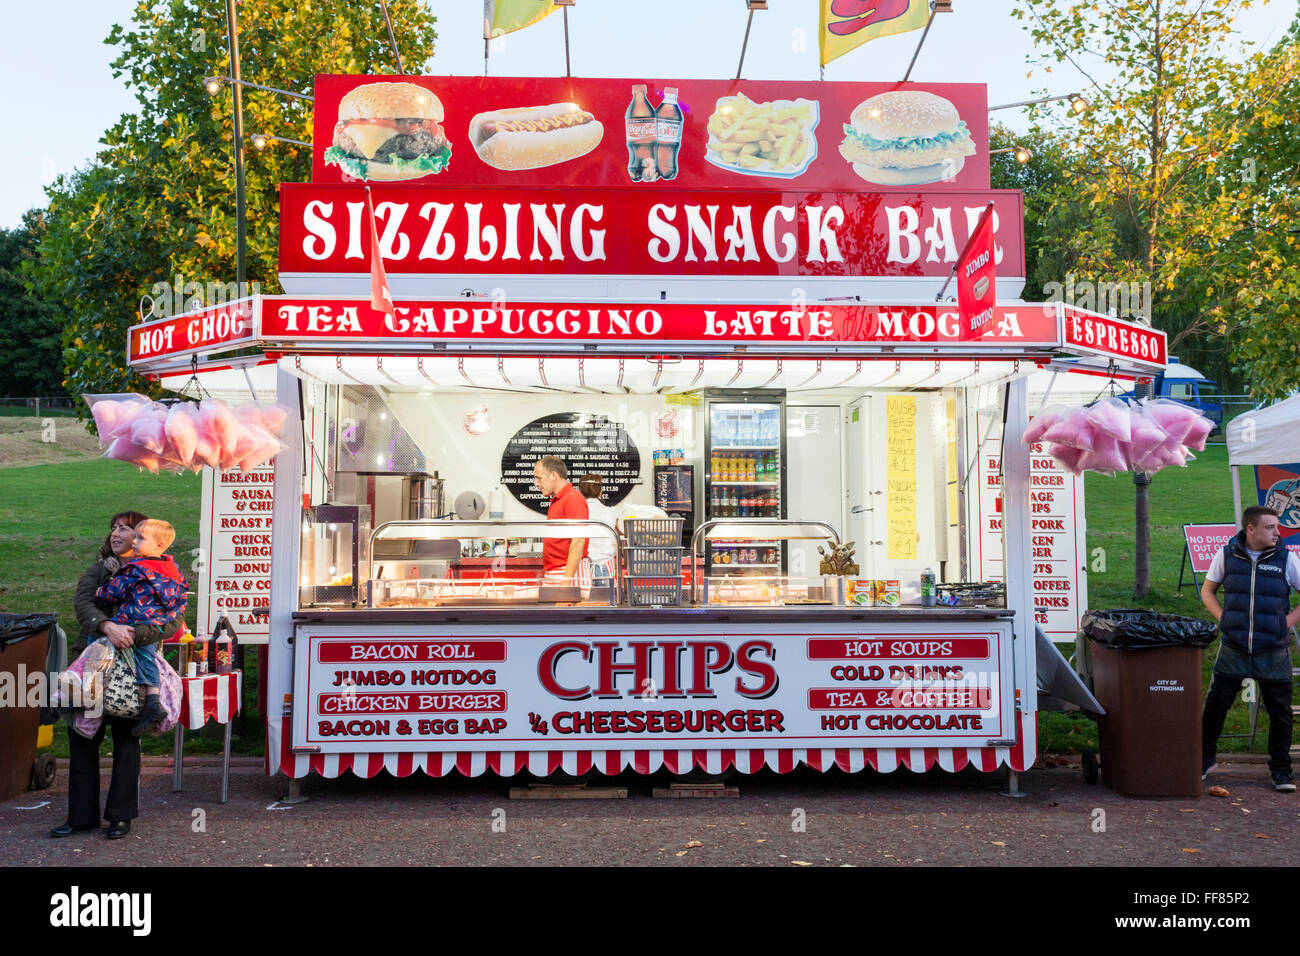 Snackbar Stall stehen, Pommes, Burger, Hot Dogs und andere verkaufen fast food bei Goose Fair, Nottingham, England, UK oder Stockfoto